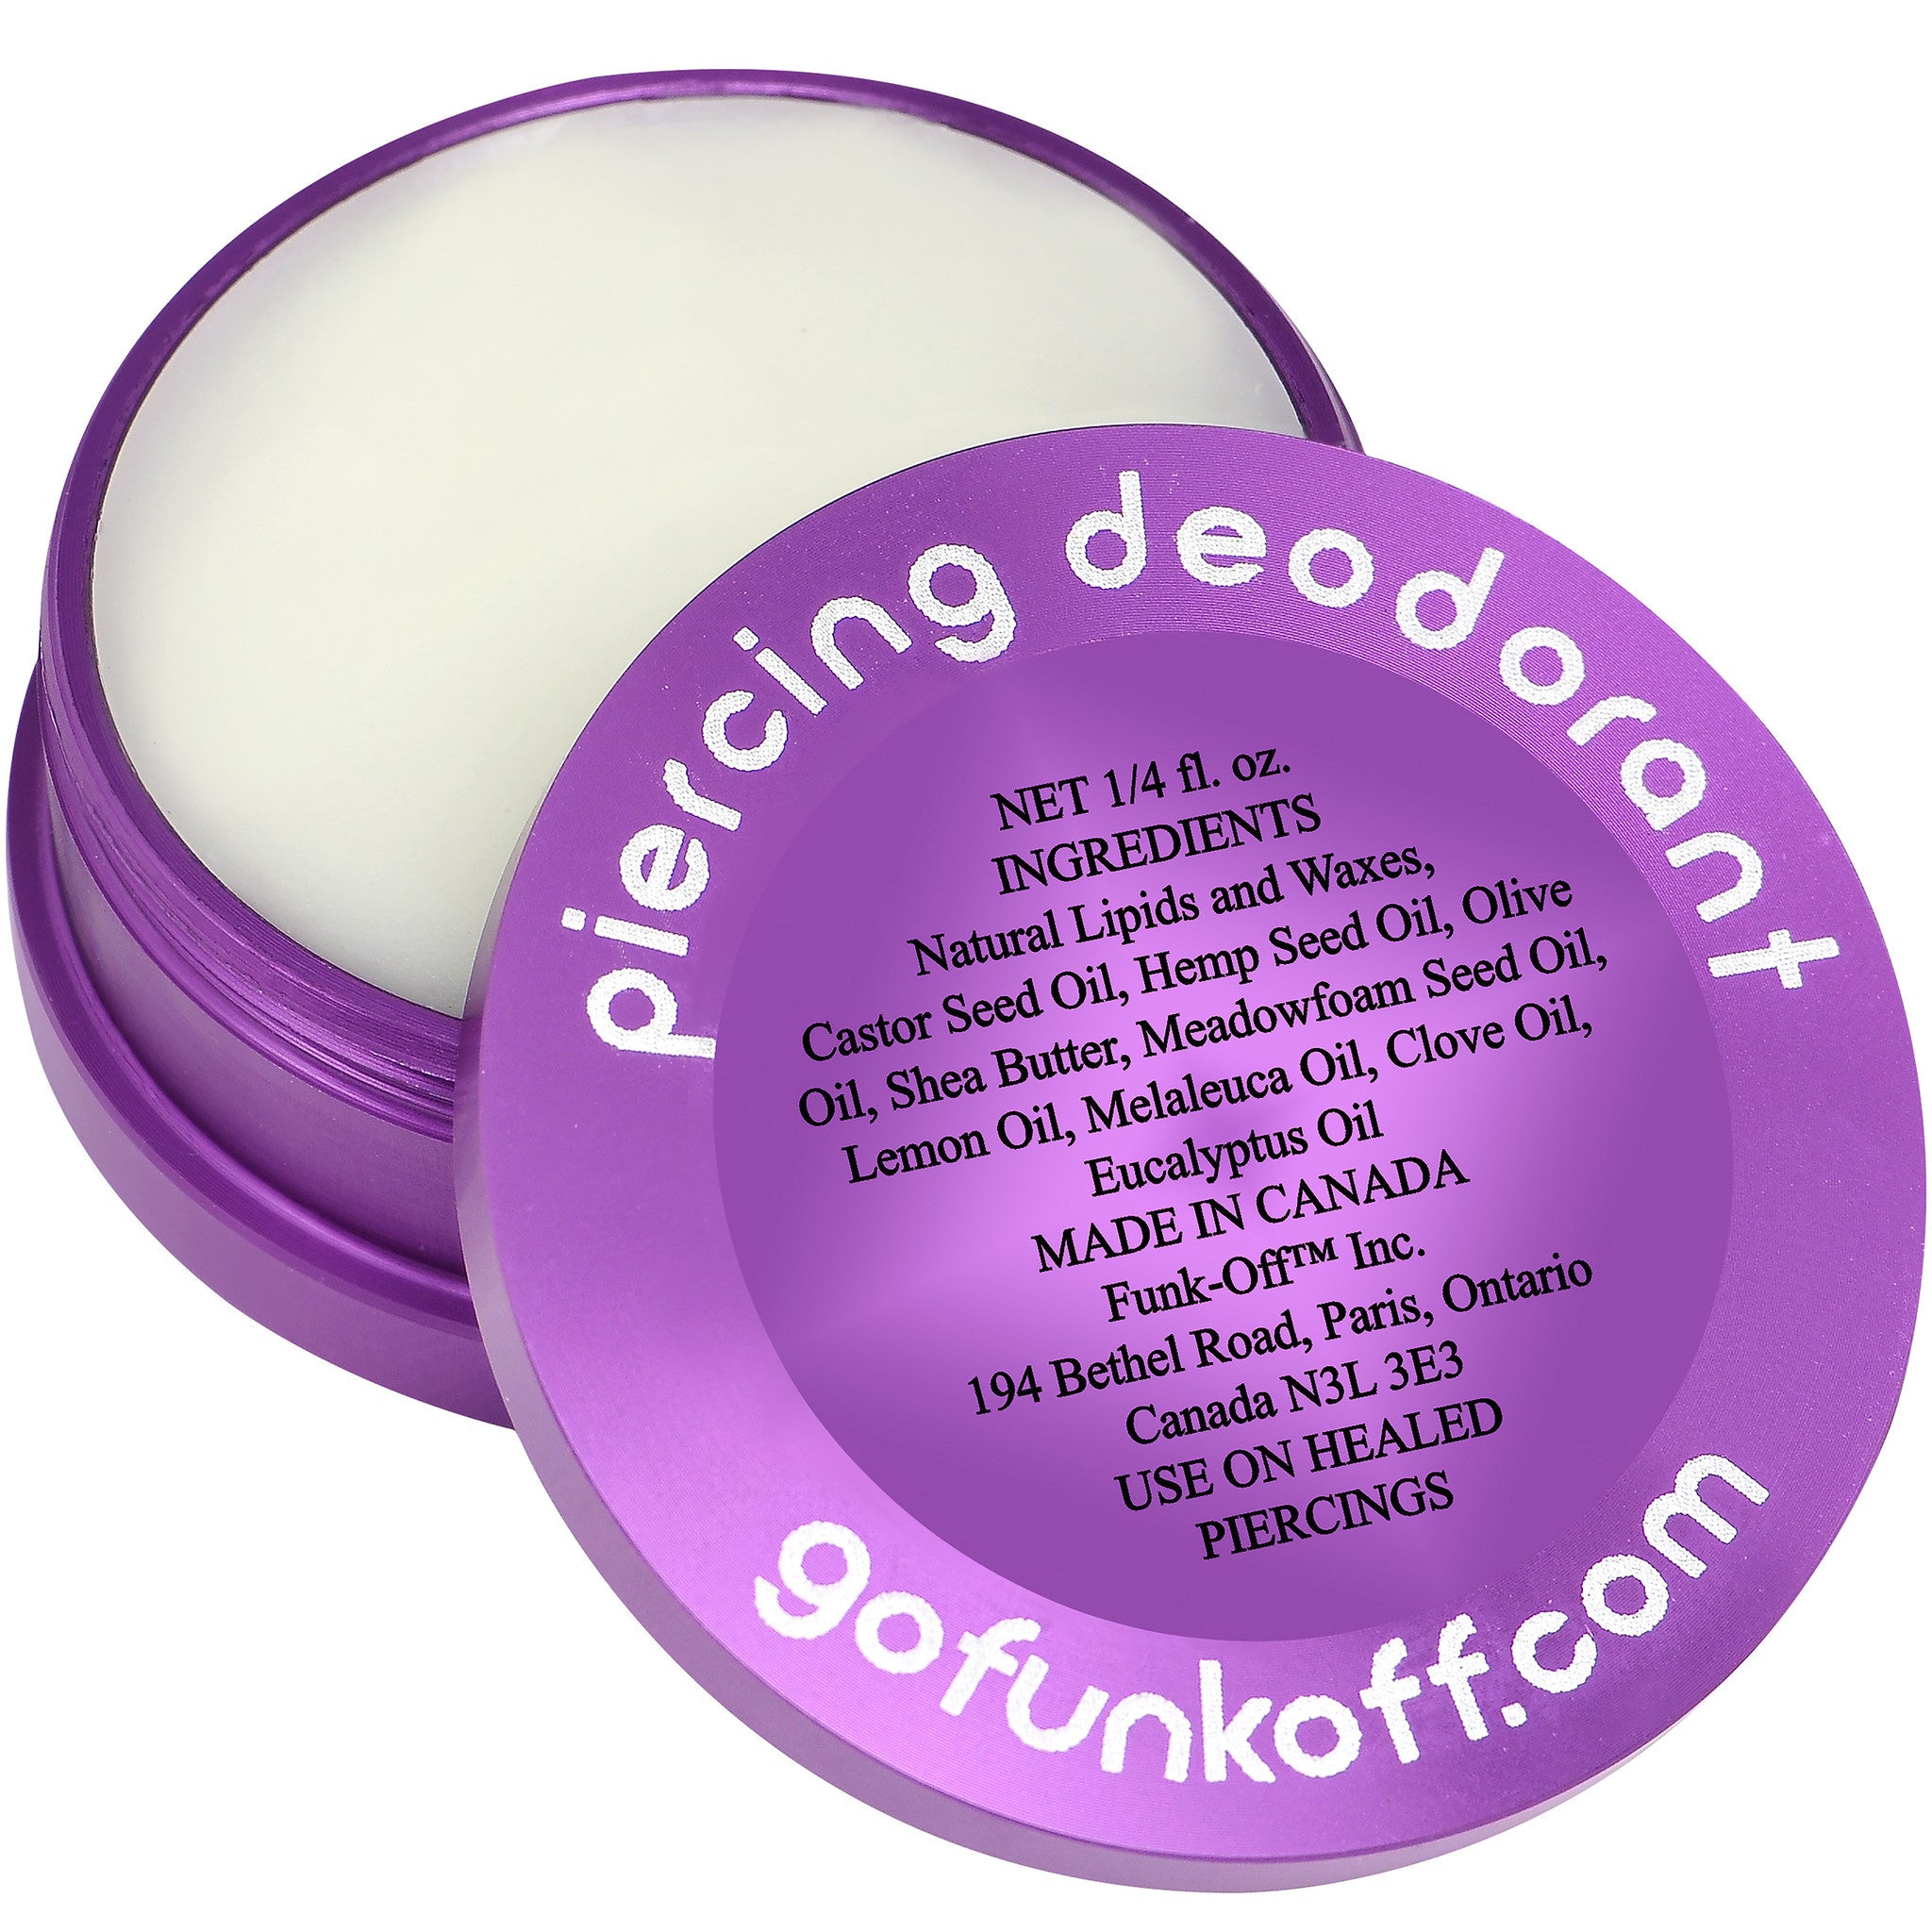 Clear Gem Purple Funk-Off Piercing Deodorant